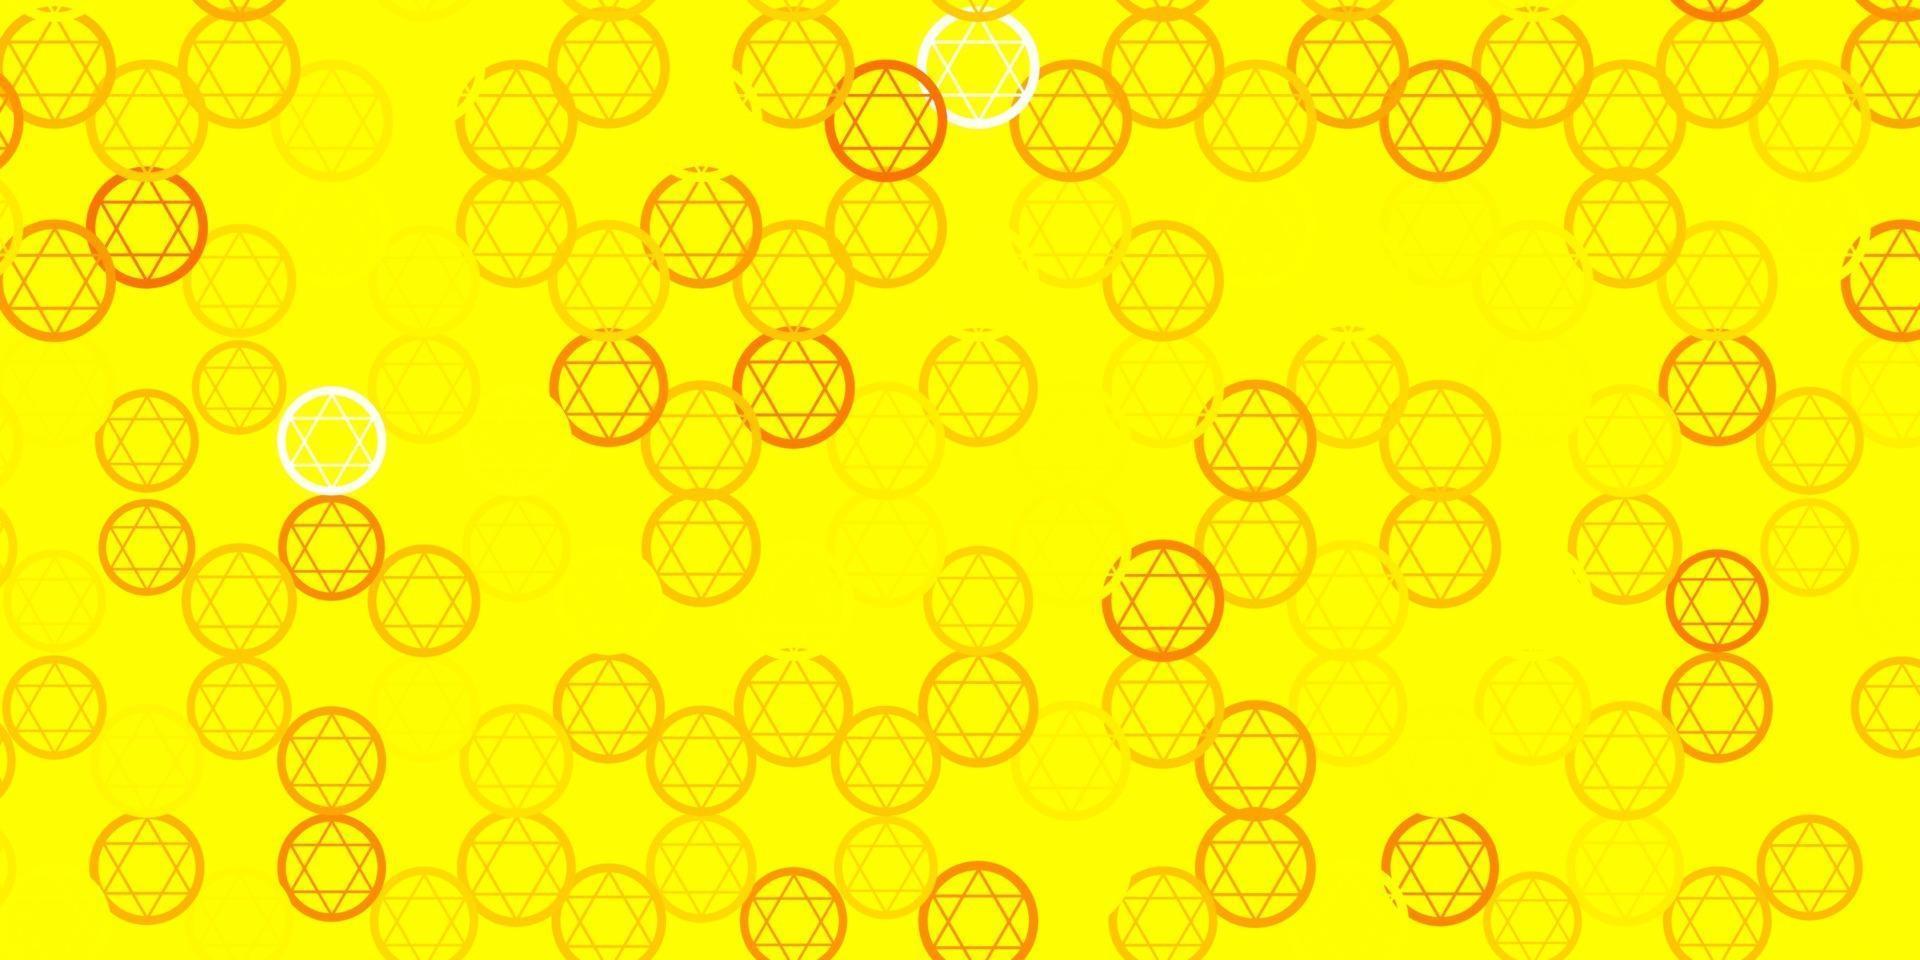 fundo vector amarelo claro com símbolos ocultos.